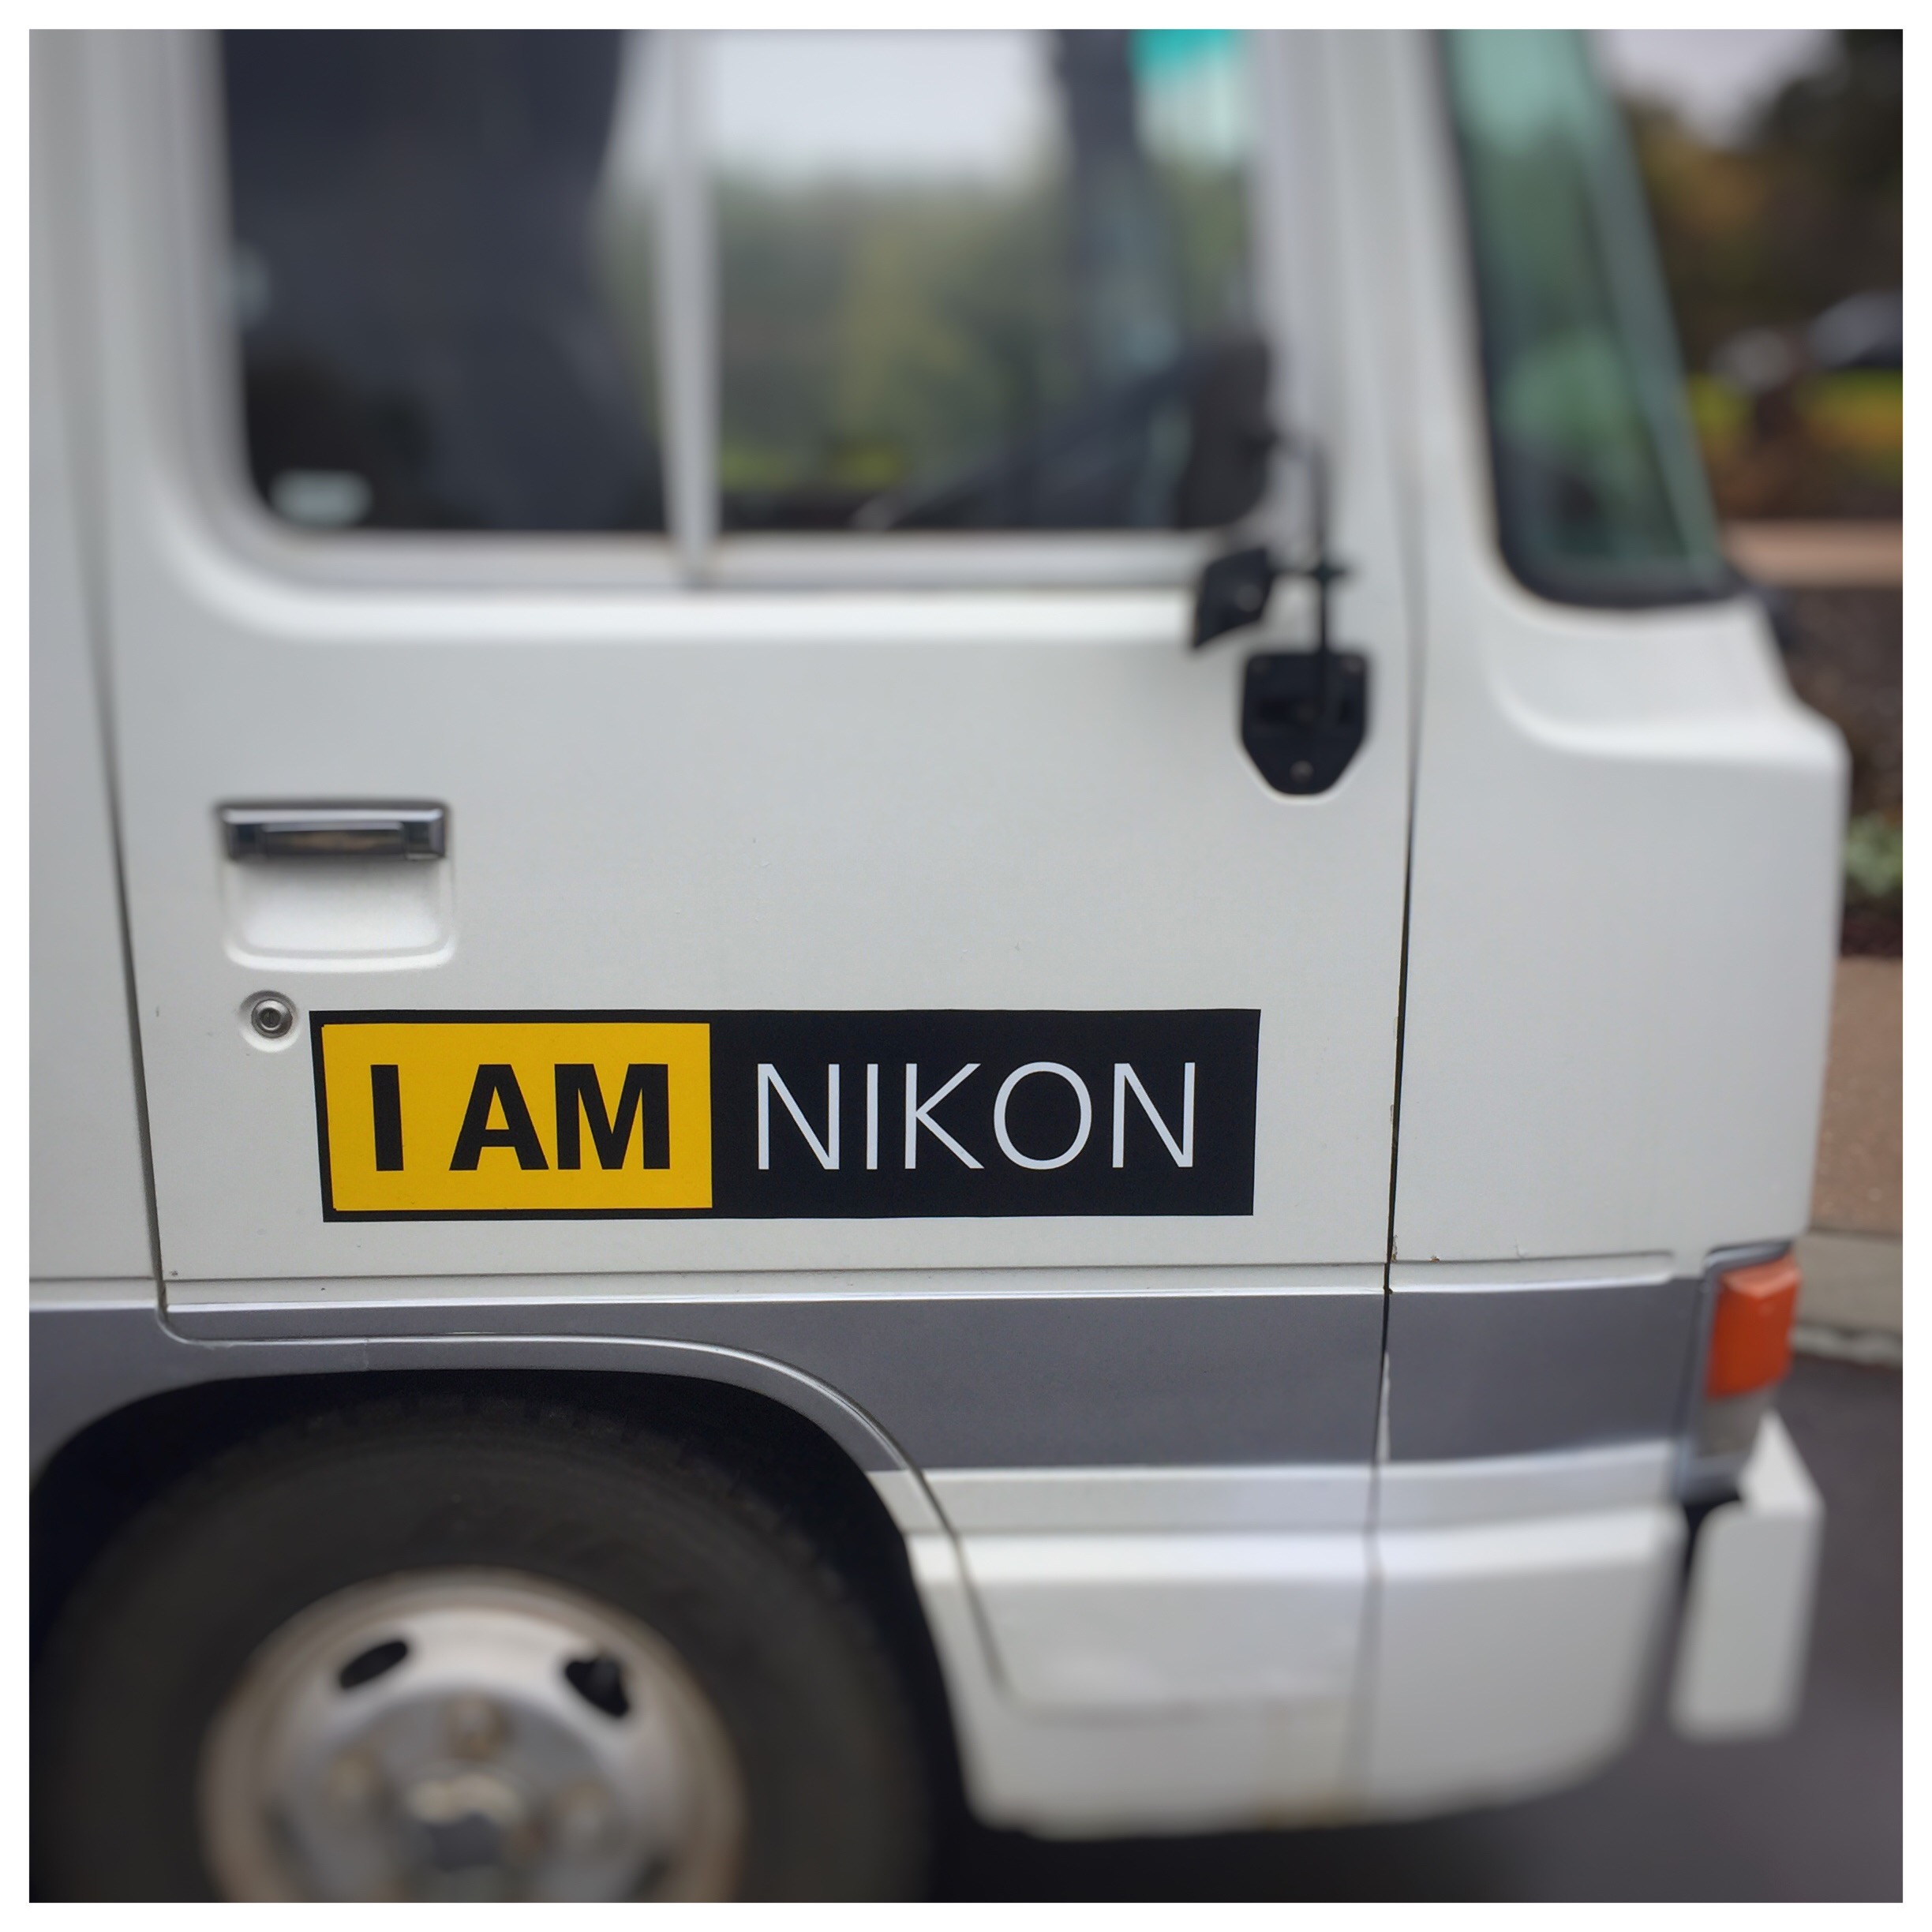 Day 2090. I Am Nikon